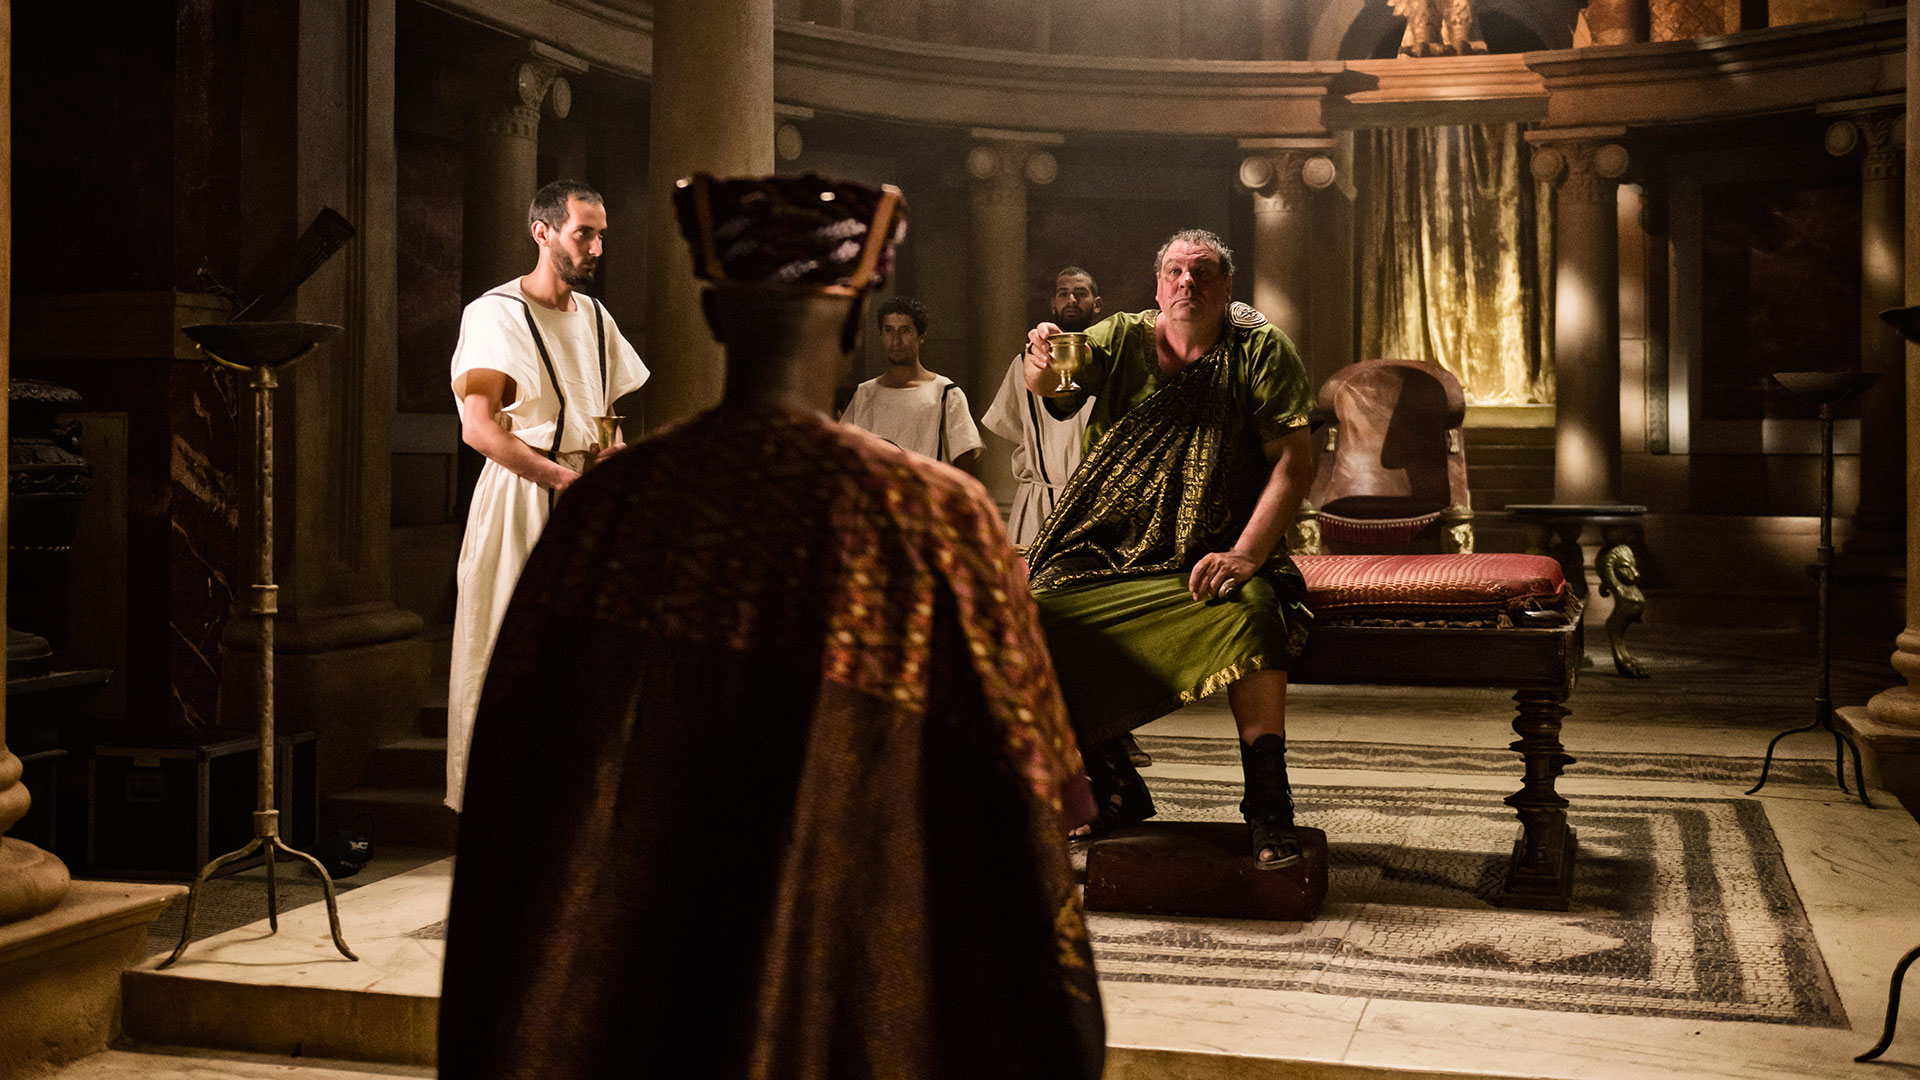 Sam Douglas as King Herod - The Bible (2013)